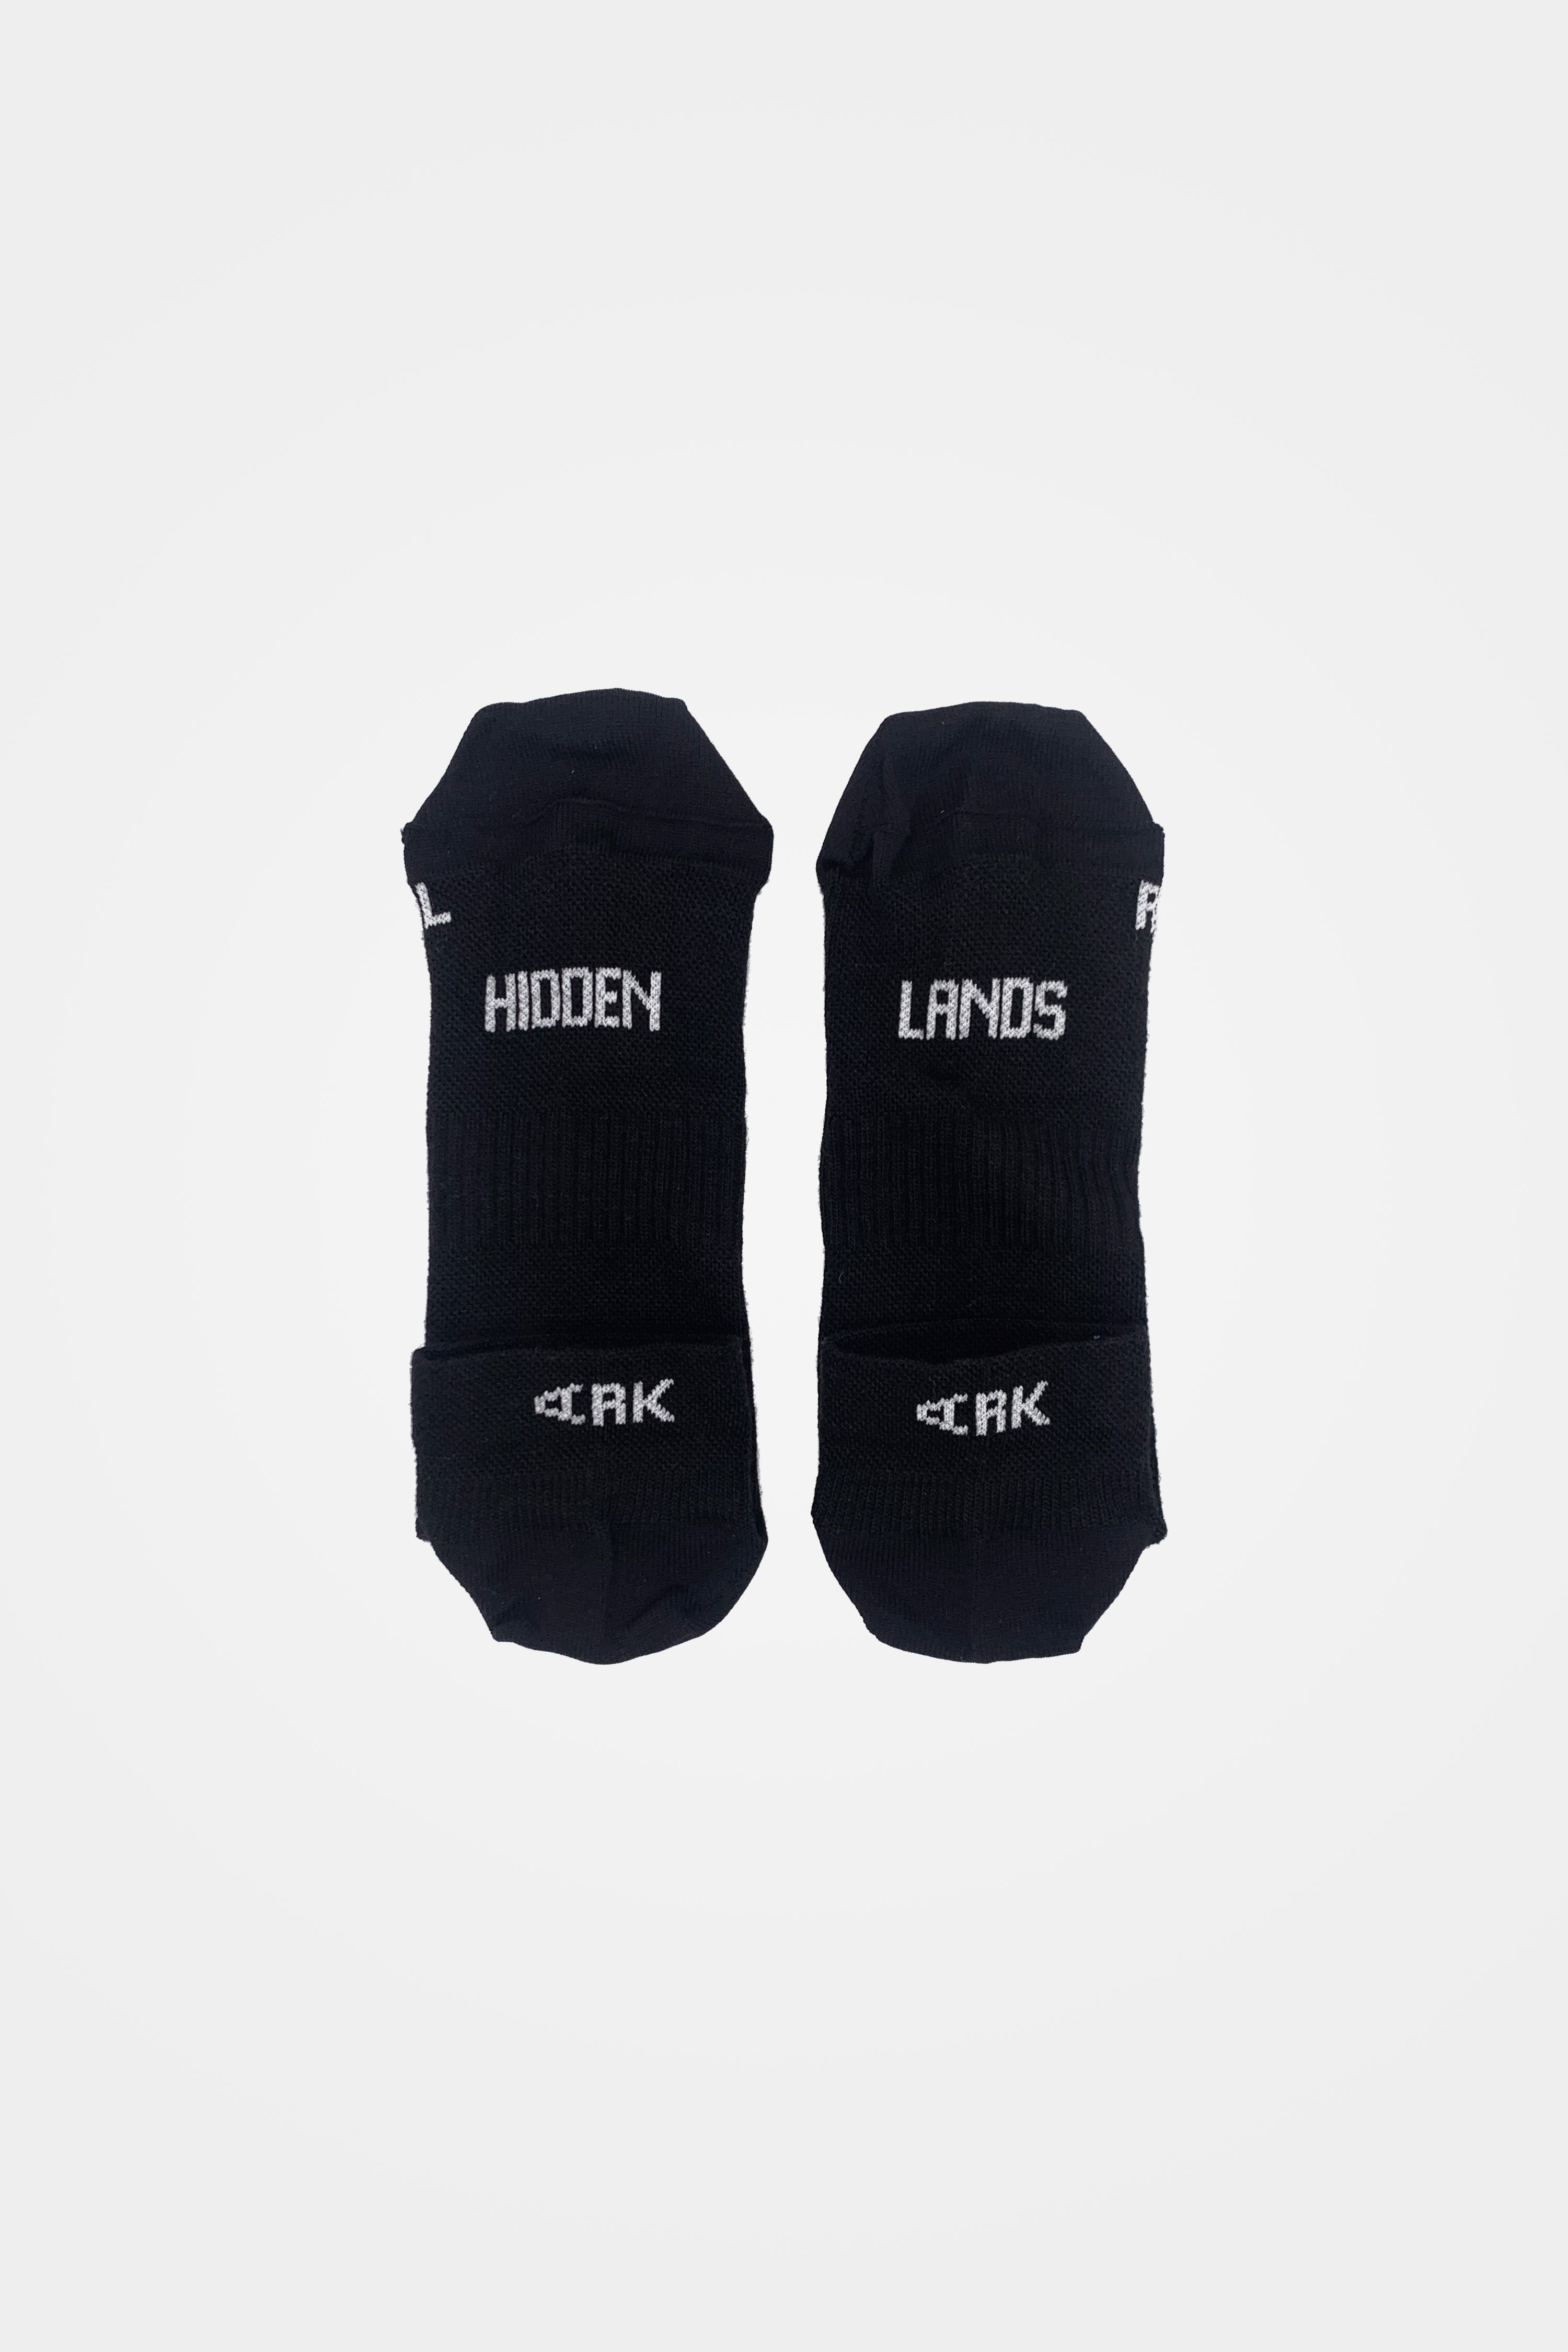 Product photo of Merino Performance Socks LOW Black